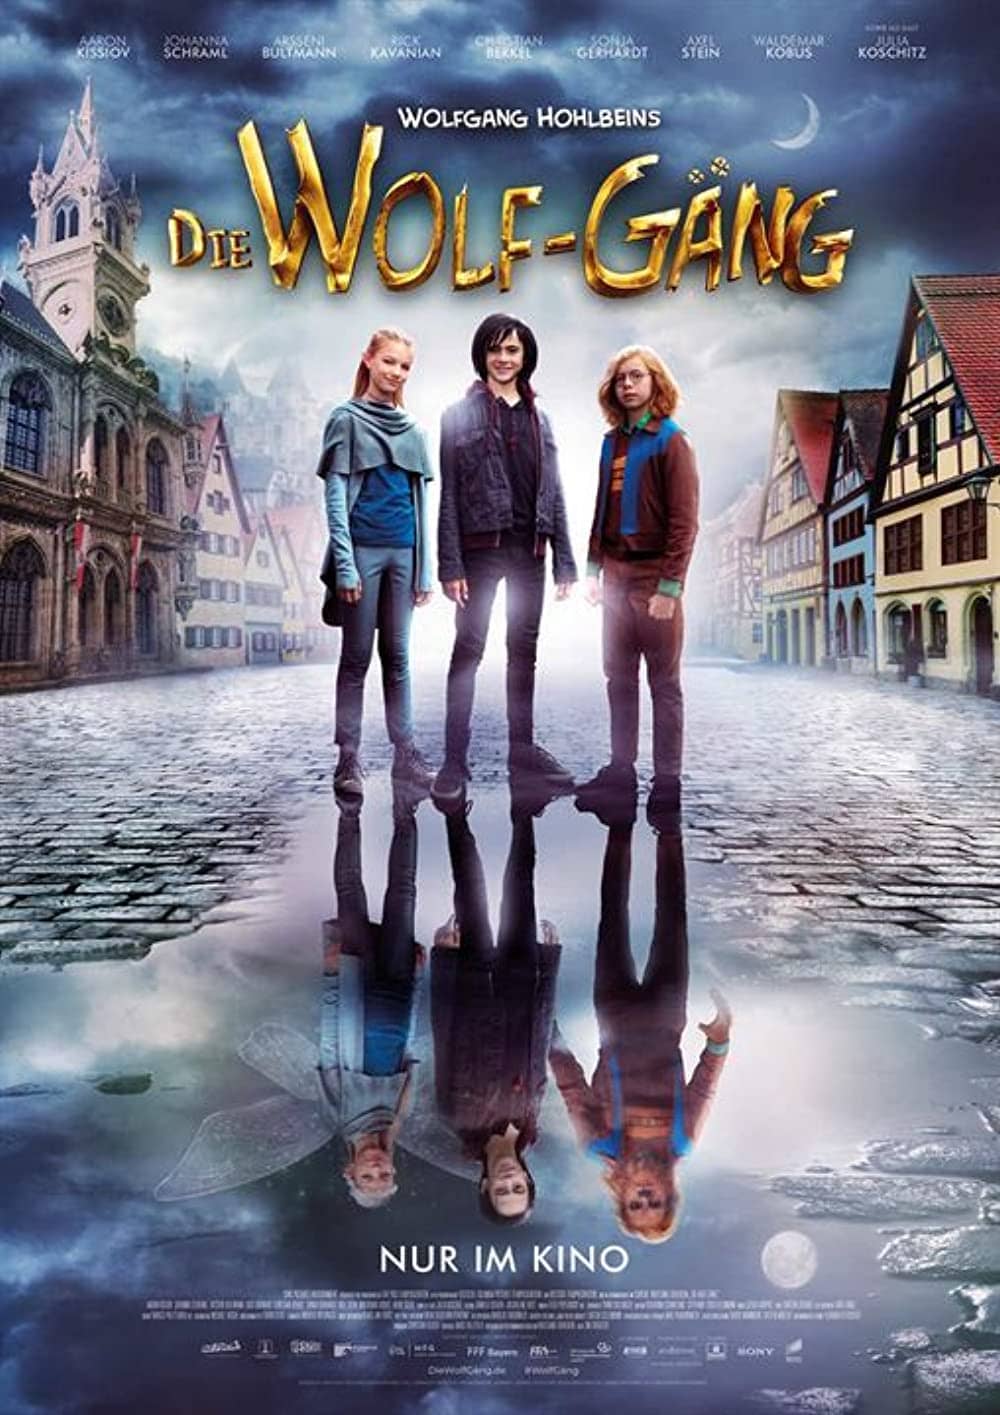 The Magic Kids Three Unlikely Heroes (Die Wolf-Gäng) แก๊งจิ๋วพลังกายสิทธิ์ (2020)